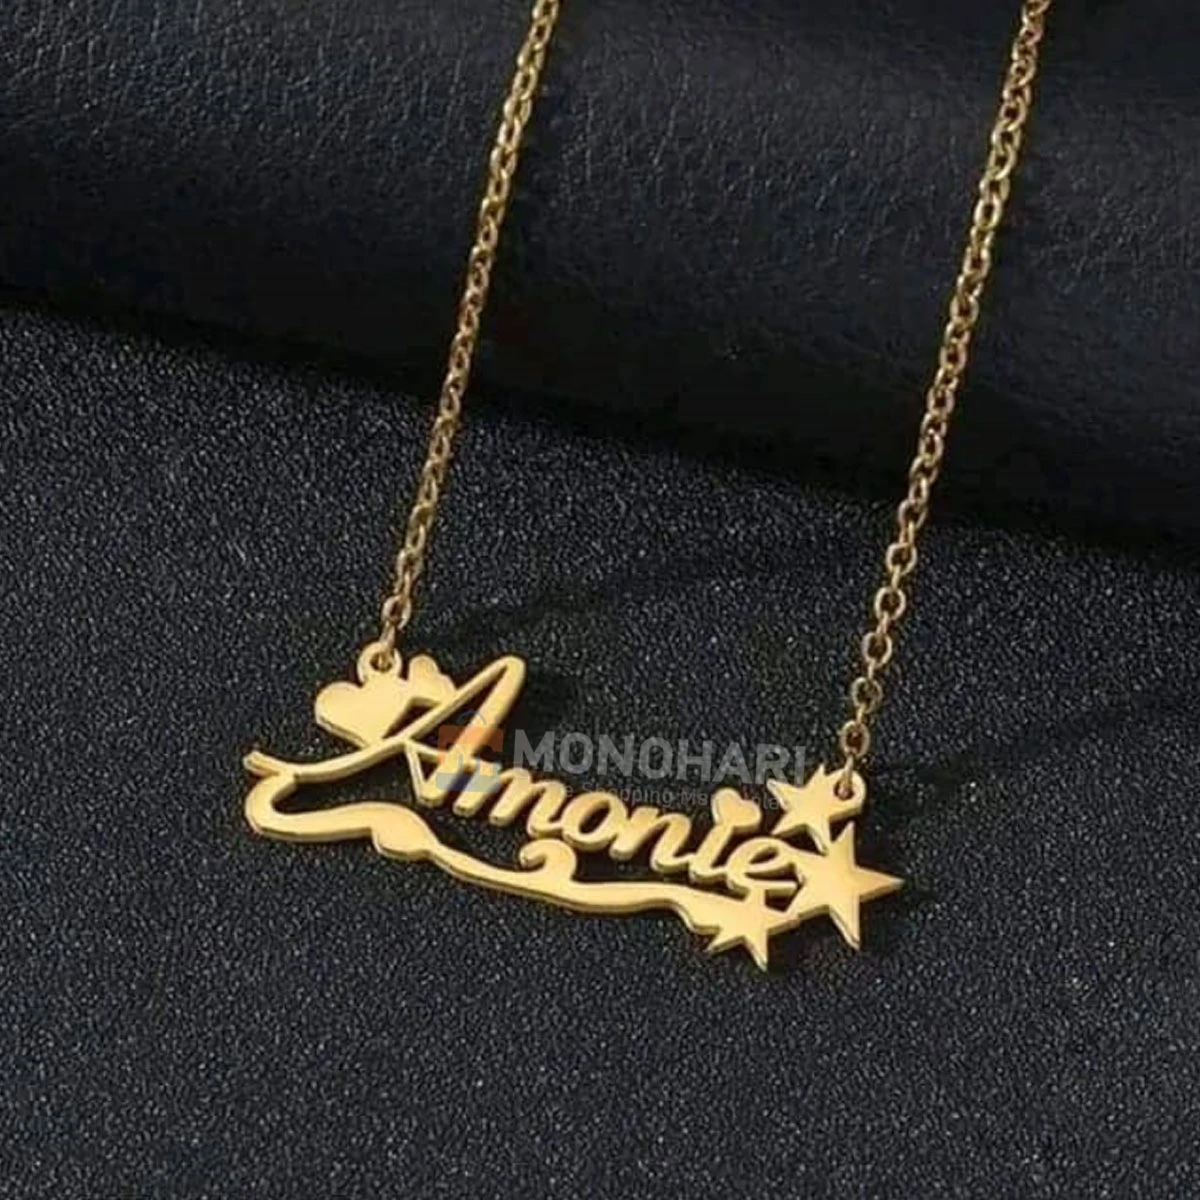 Single Name Necklace (Amoni/Mona) Heart Line & Triple Star shape 22K Gold Plated Customized Necklace